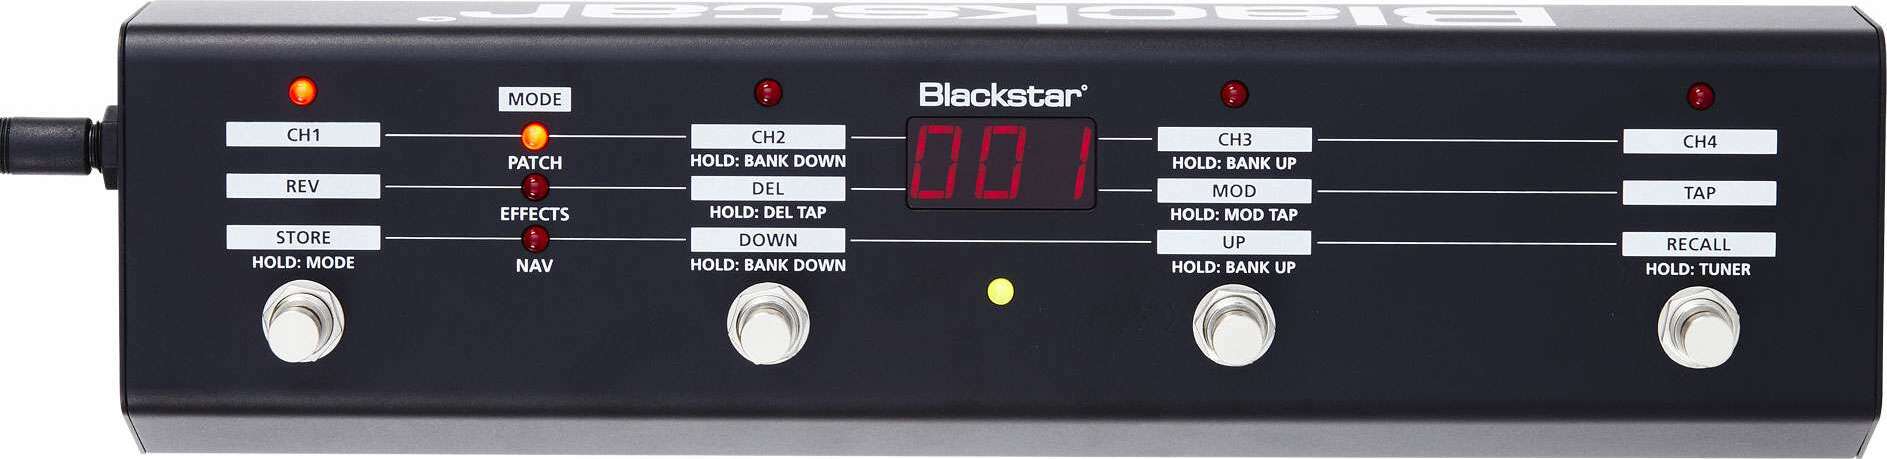 Blackstar Fs10 - Pedalera para amplificador - Main picture